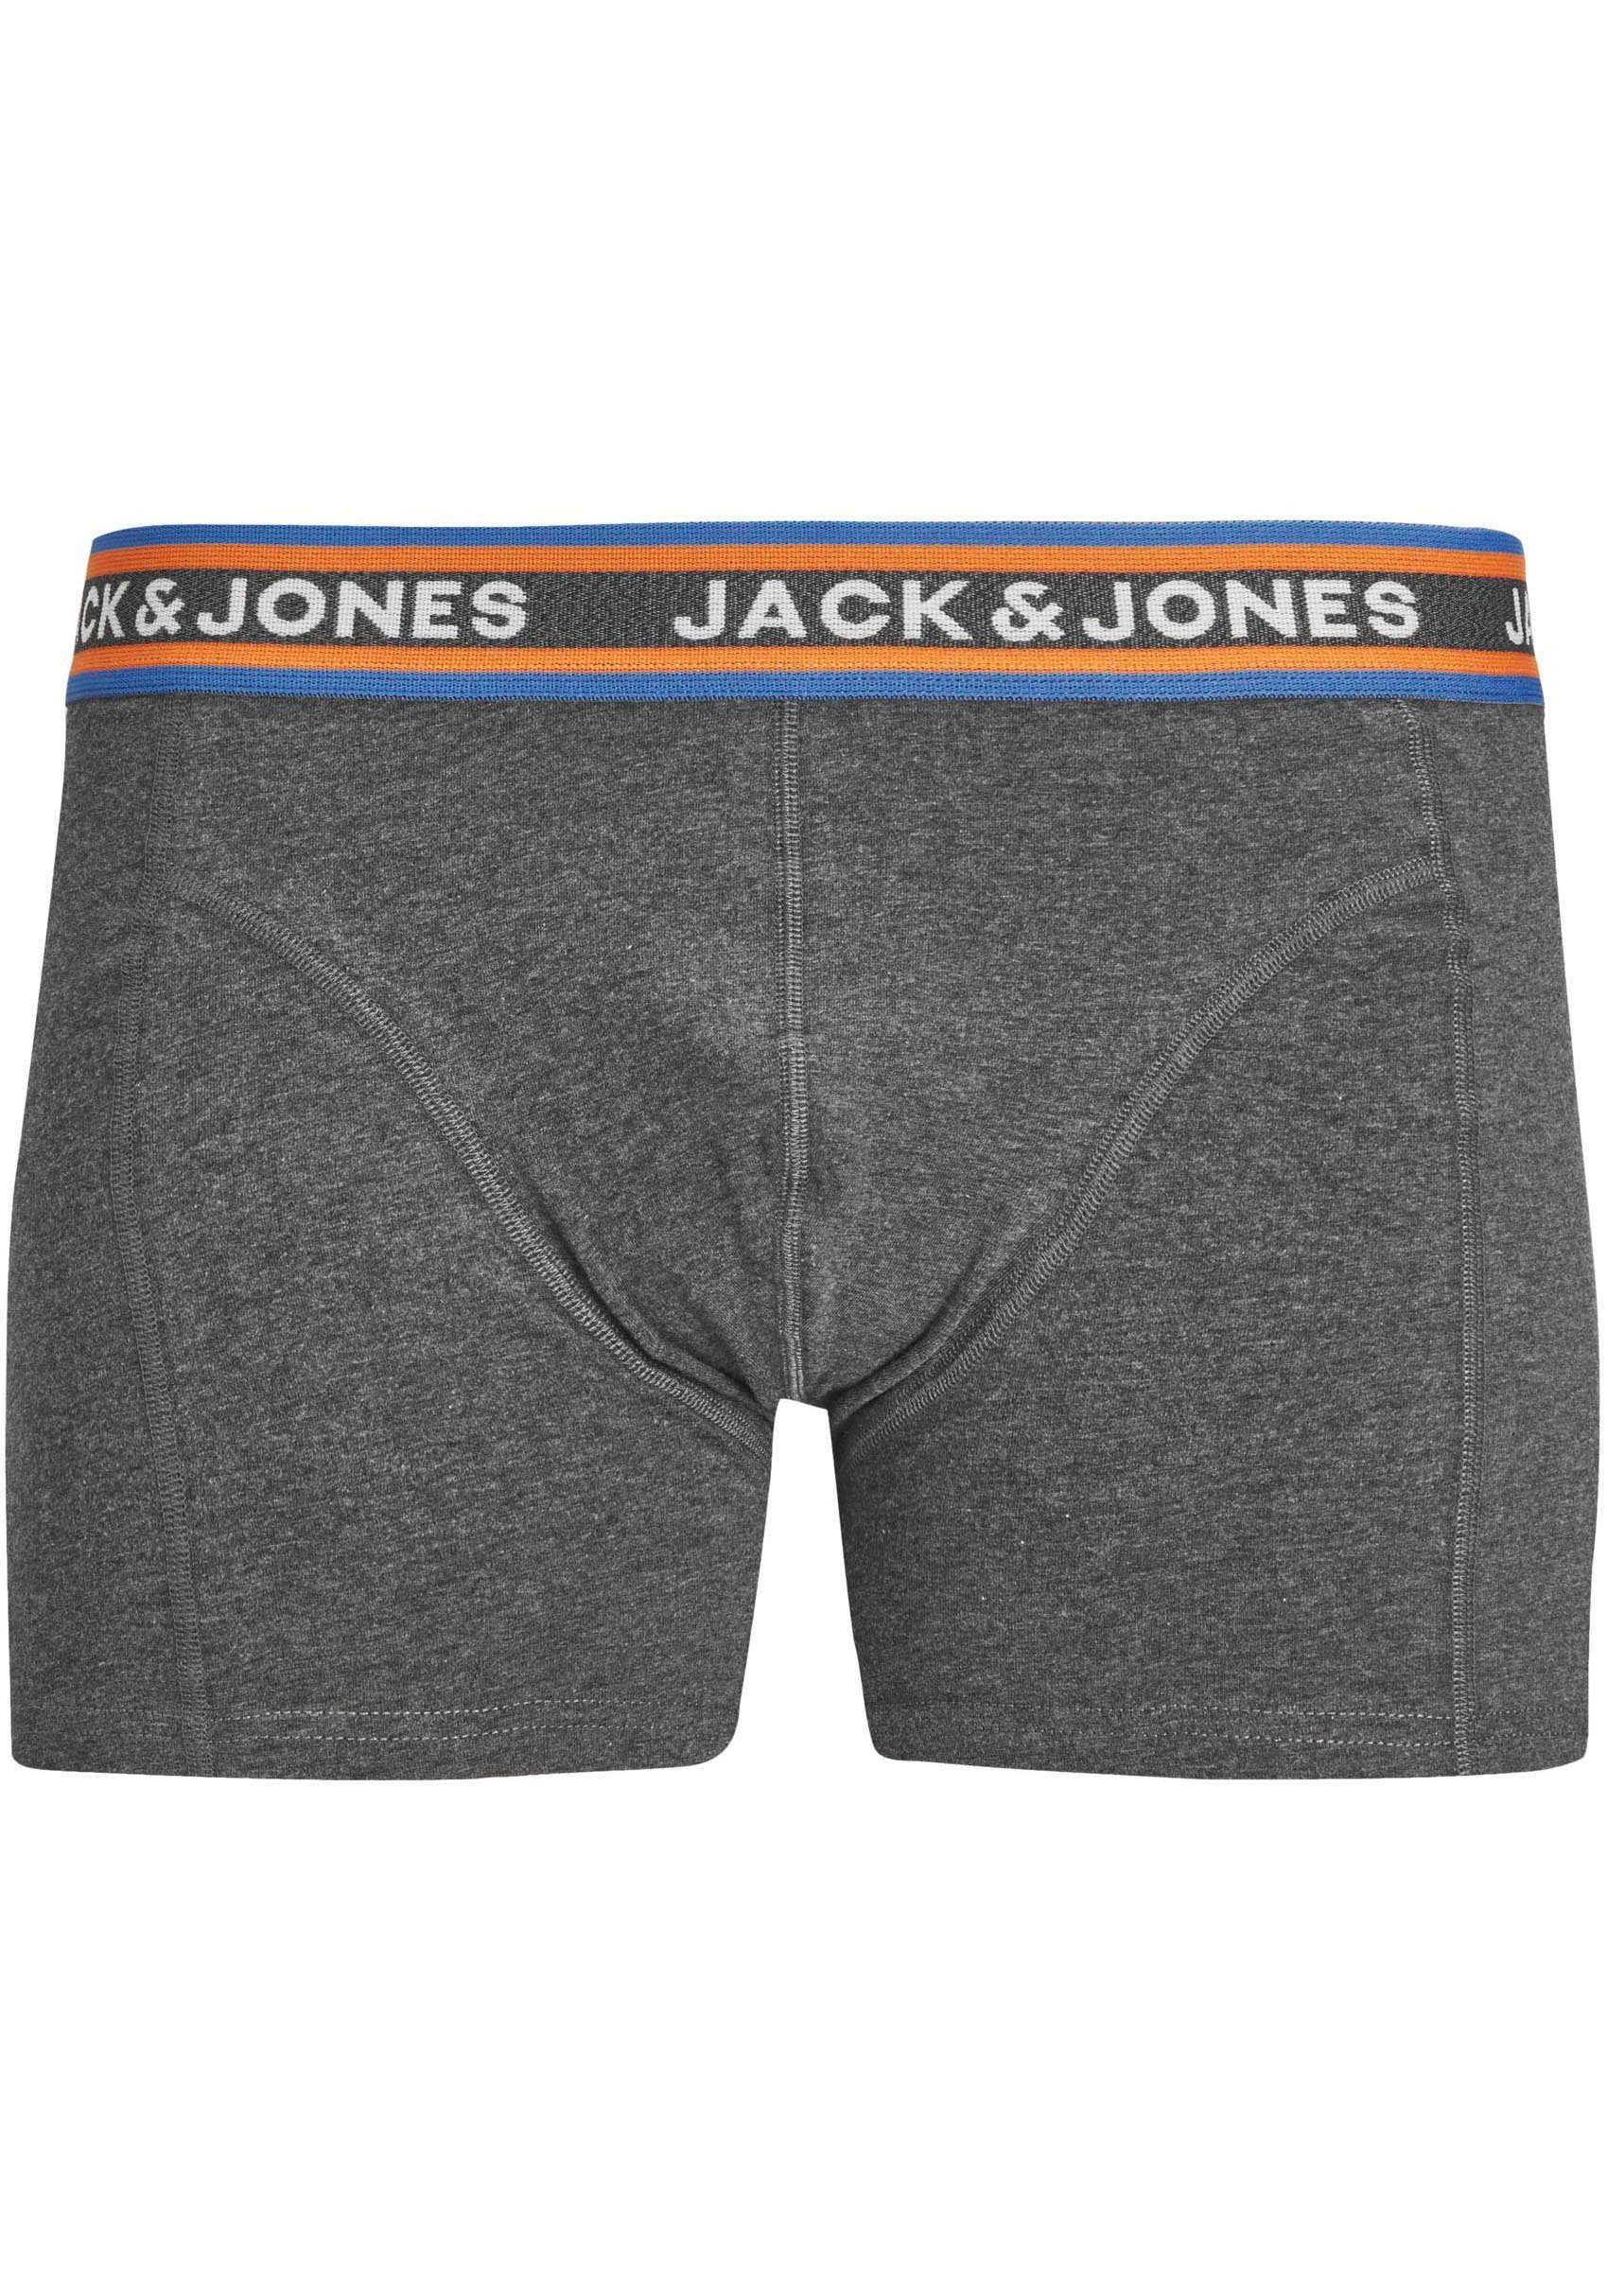 Jones exub / navy / JACMYLE & NOOS dgm Jack 3 TRUNKS (Packung, Trunk PACK blazer 3-St)